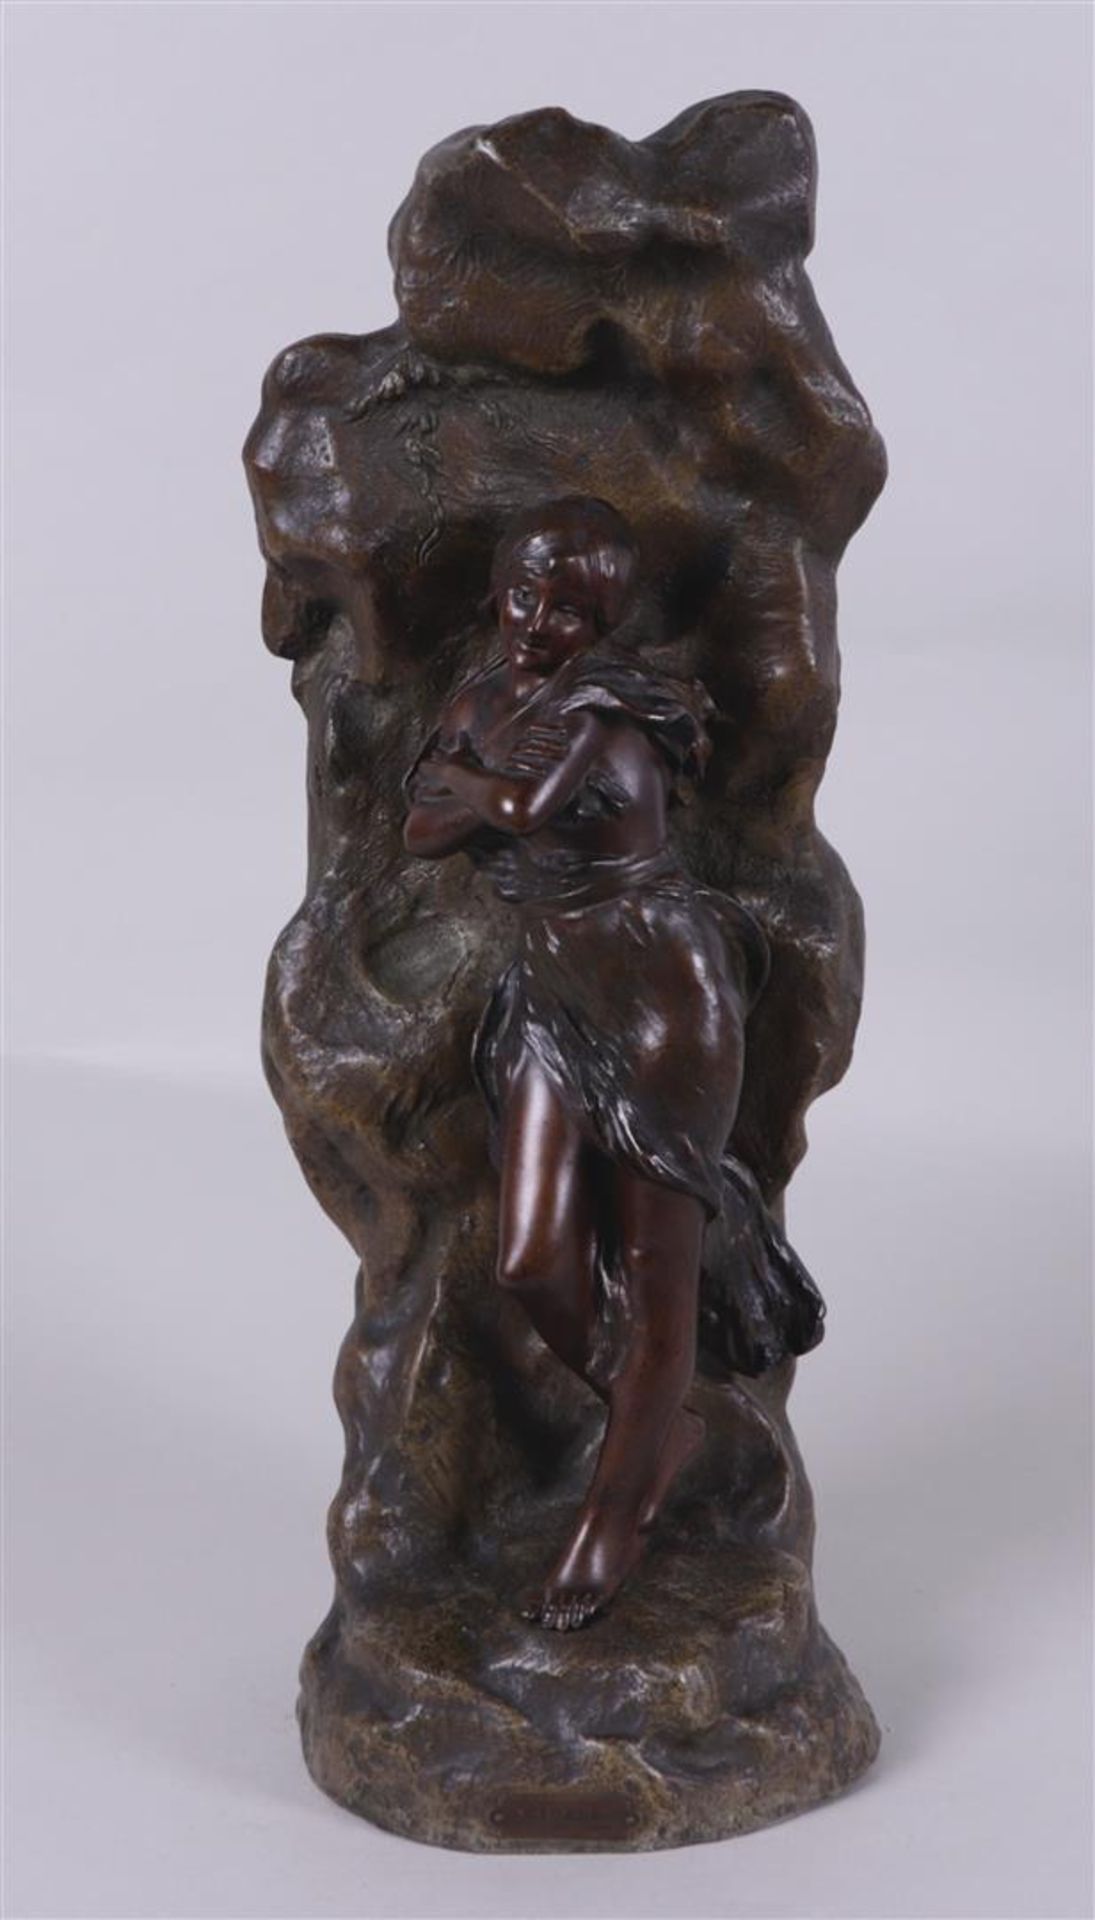 Riguai IX-XX, "Cigale", cast metal lock.
56 cm.